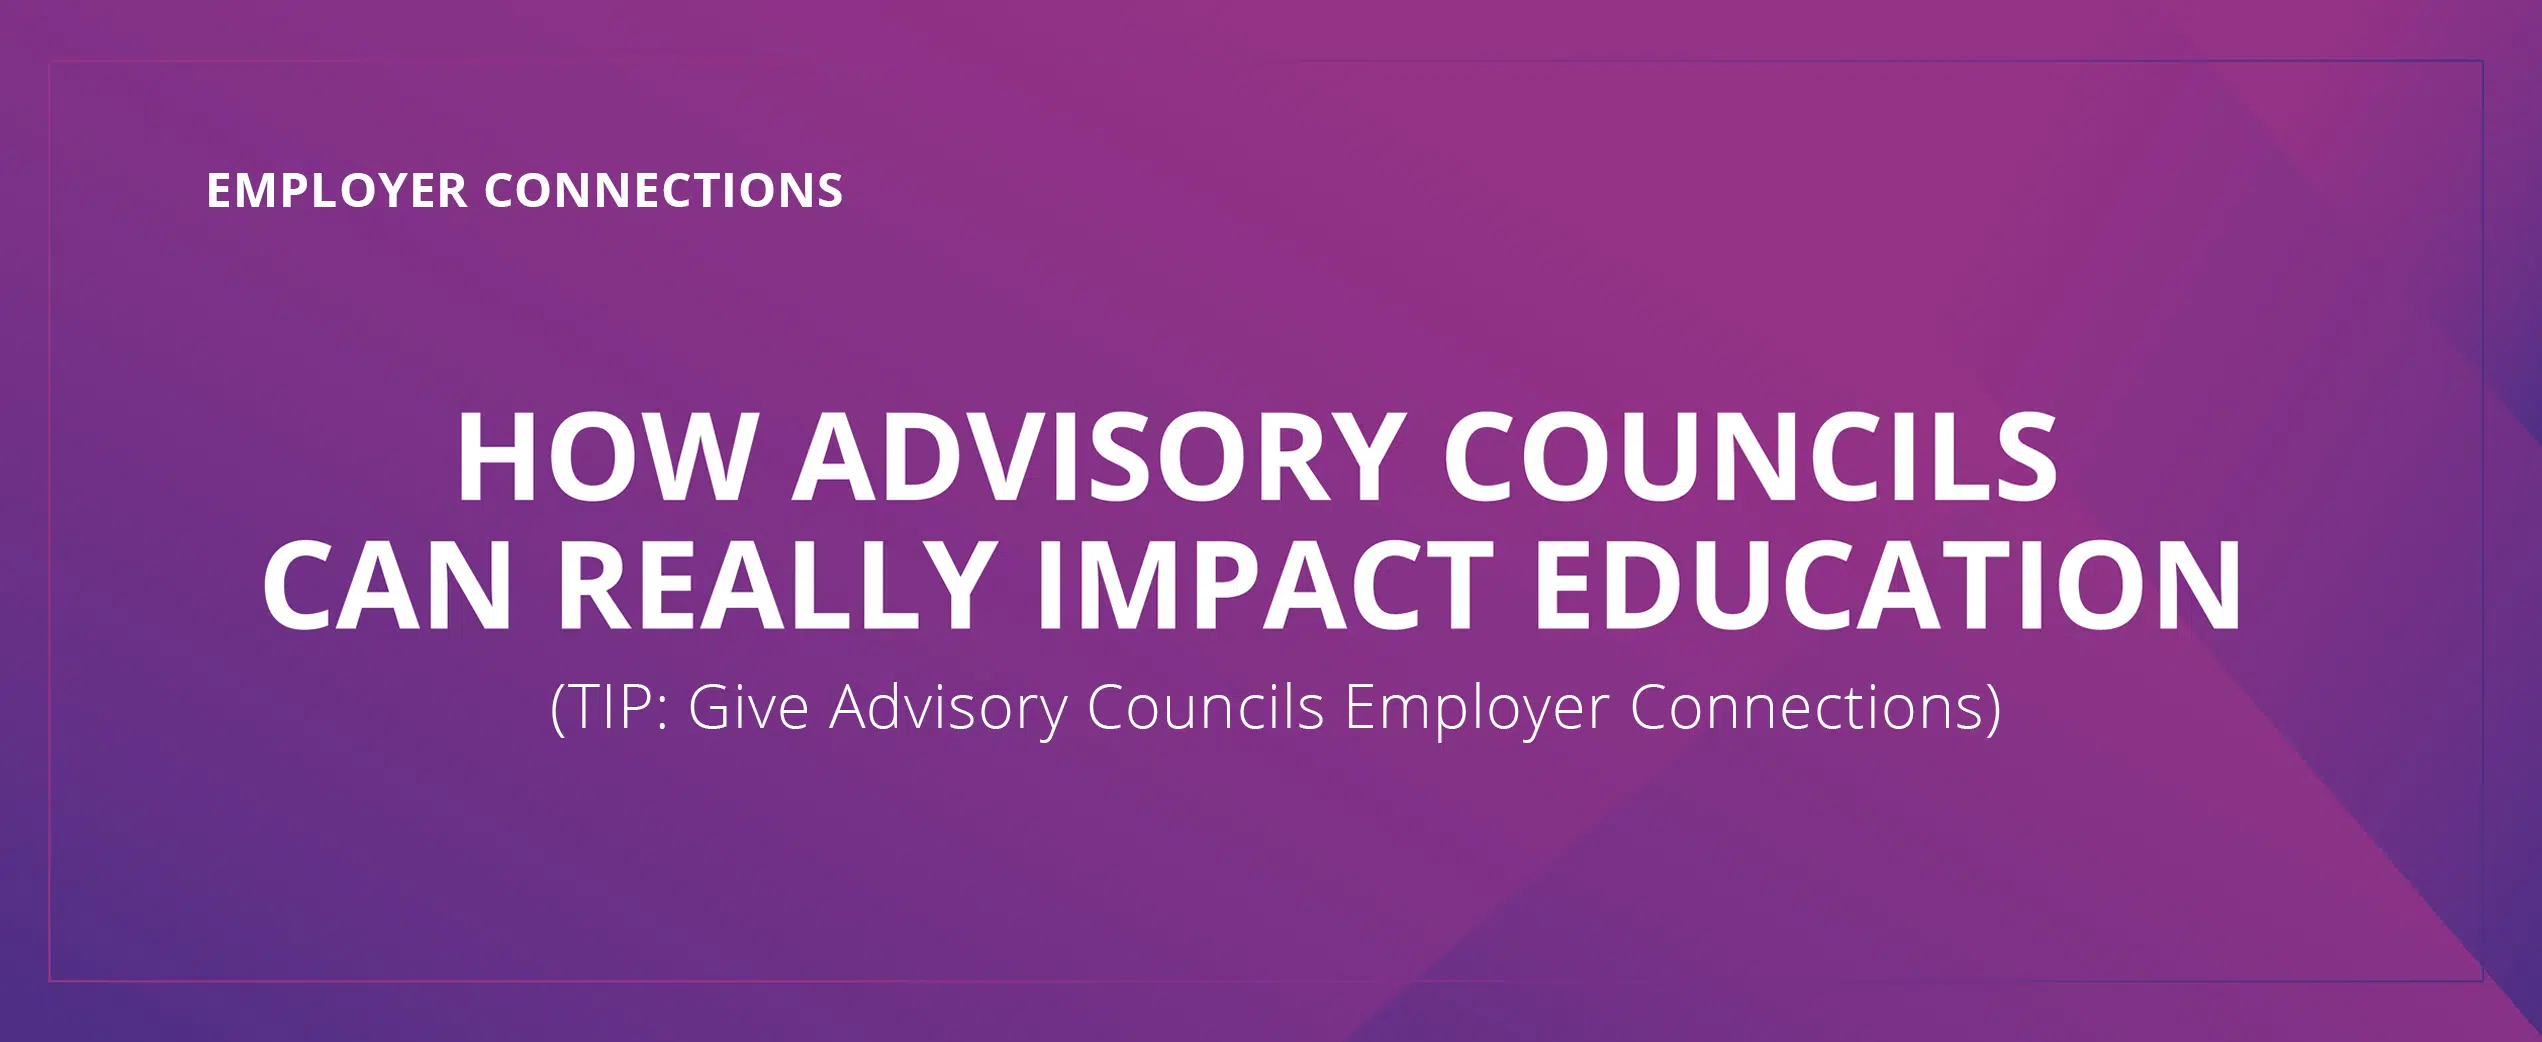 How Advisory Councils Impact Education